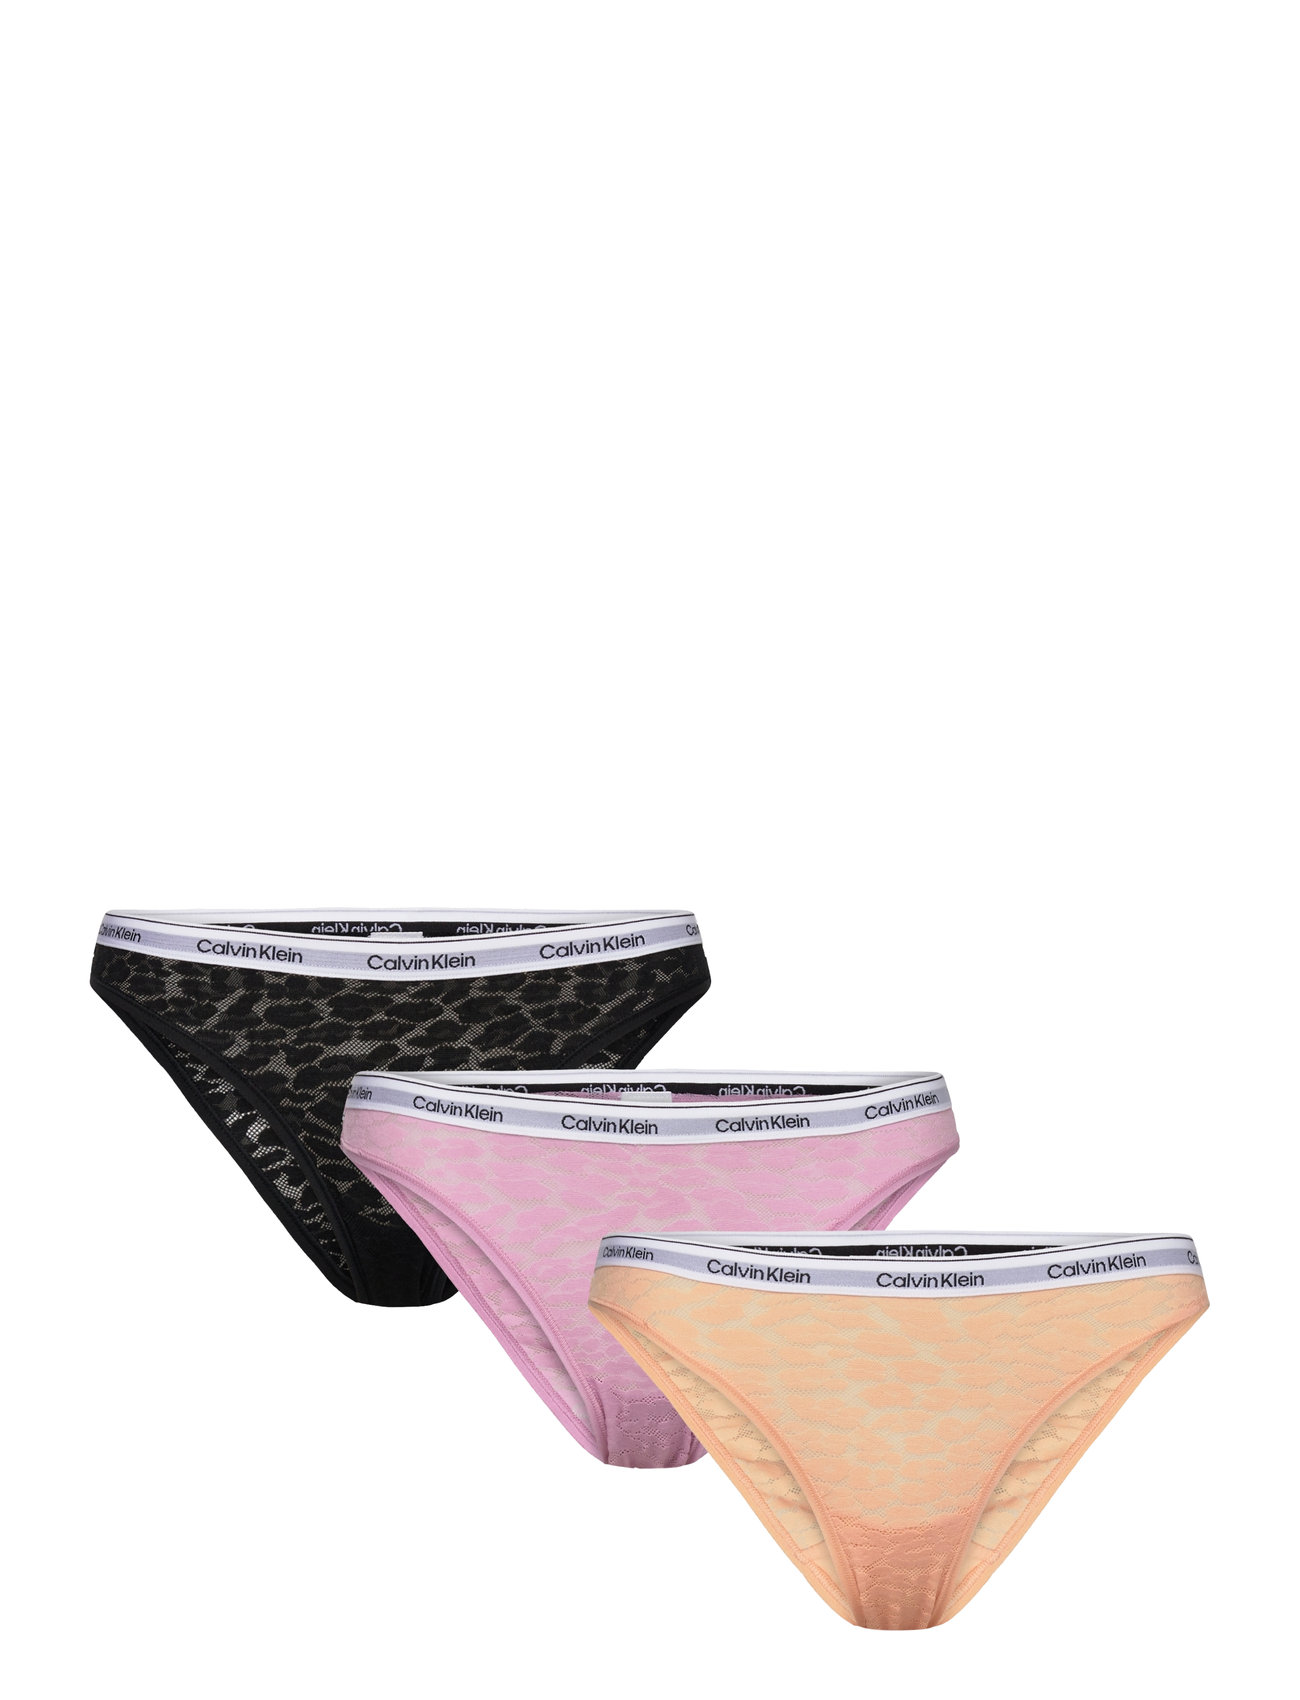 Calvin Klein panties women 2pack 100% original - Poland, New - The wholesale  platform